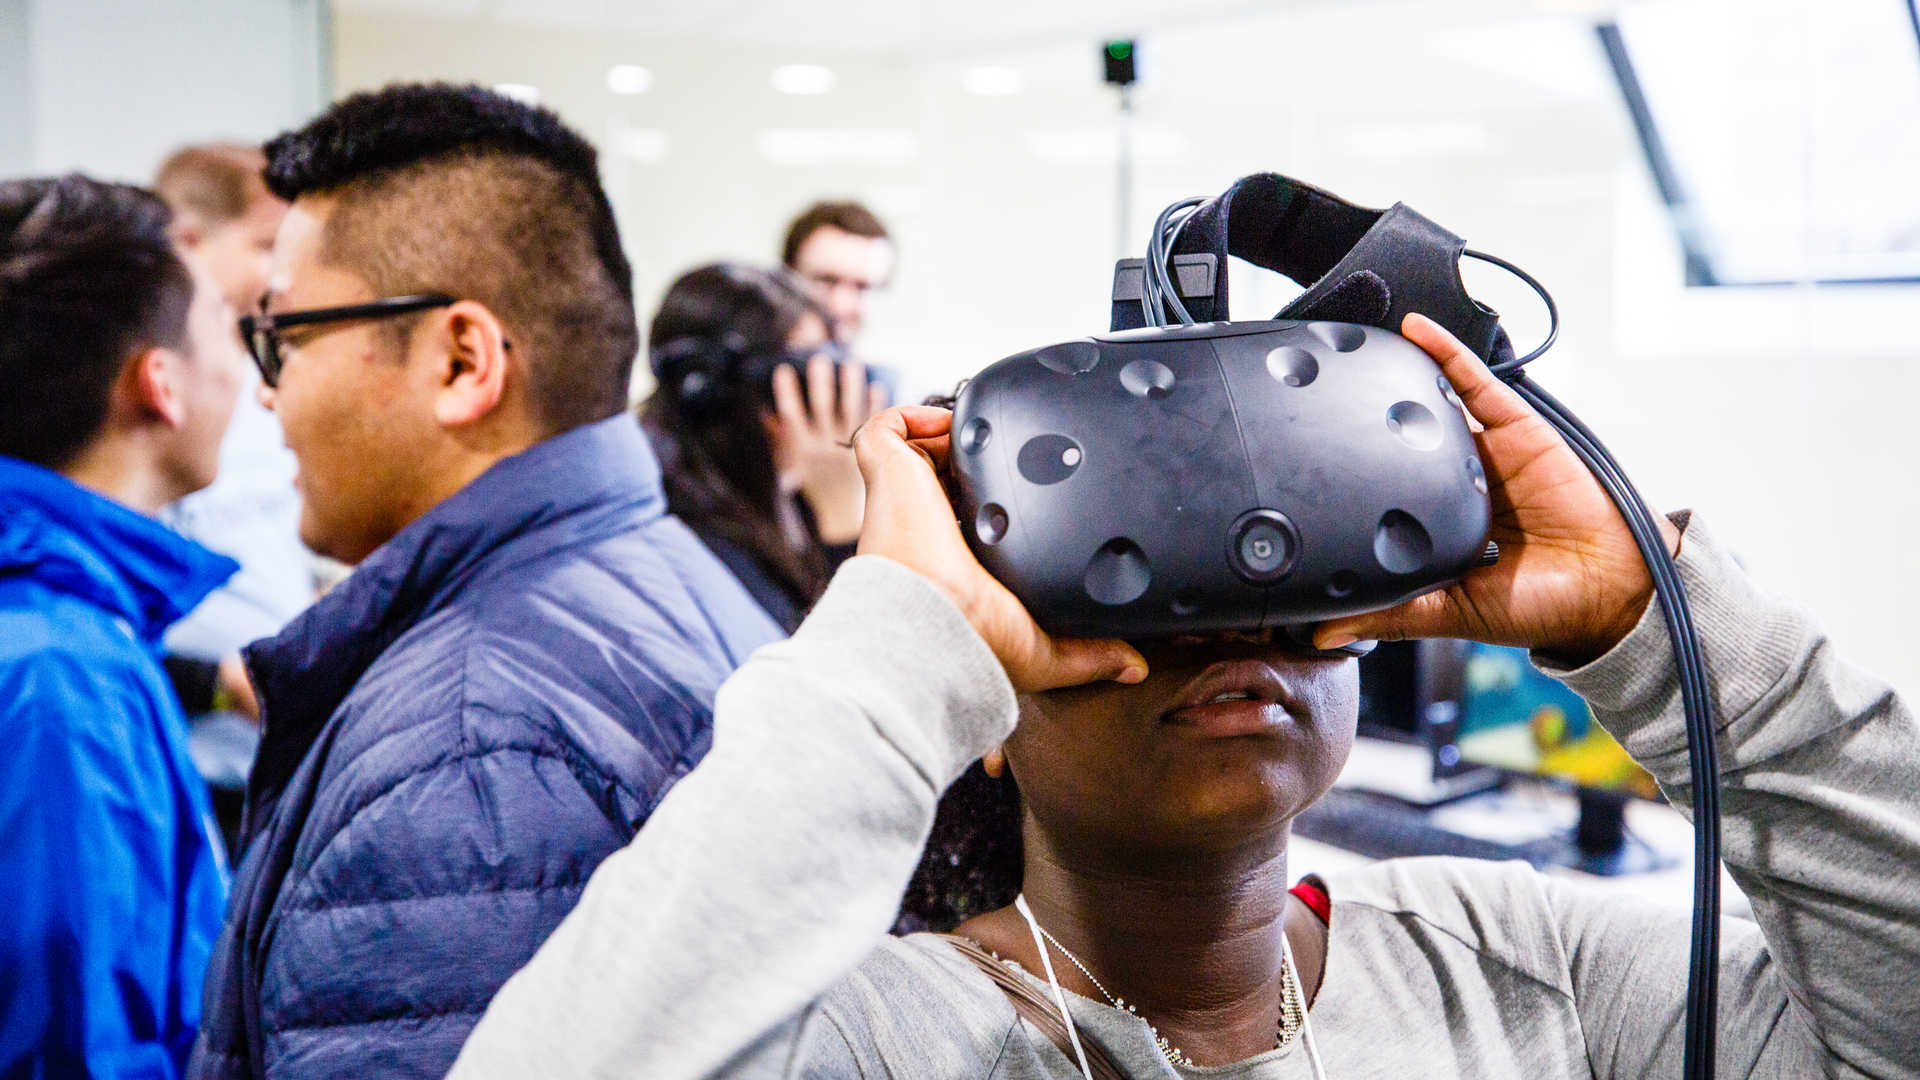 Student uses virtual reality goggles